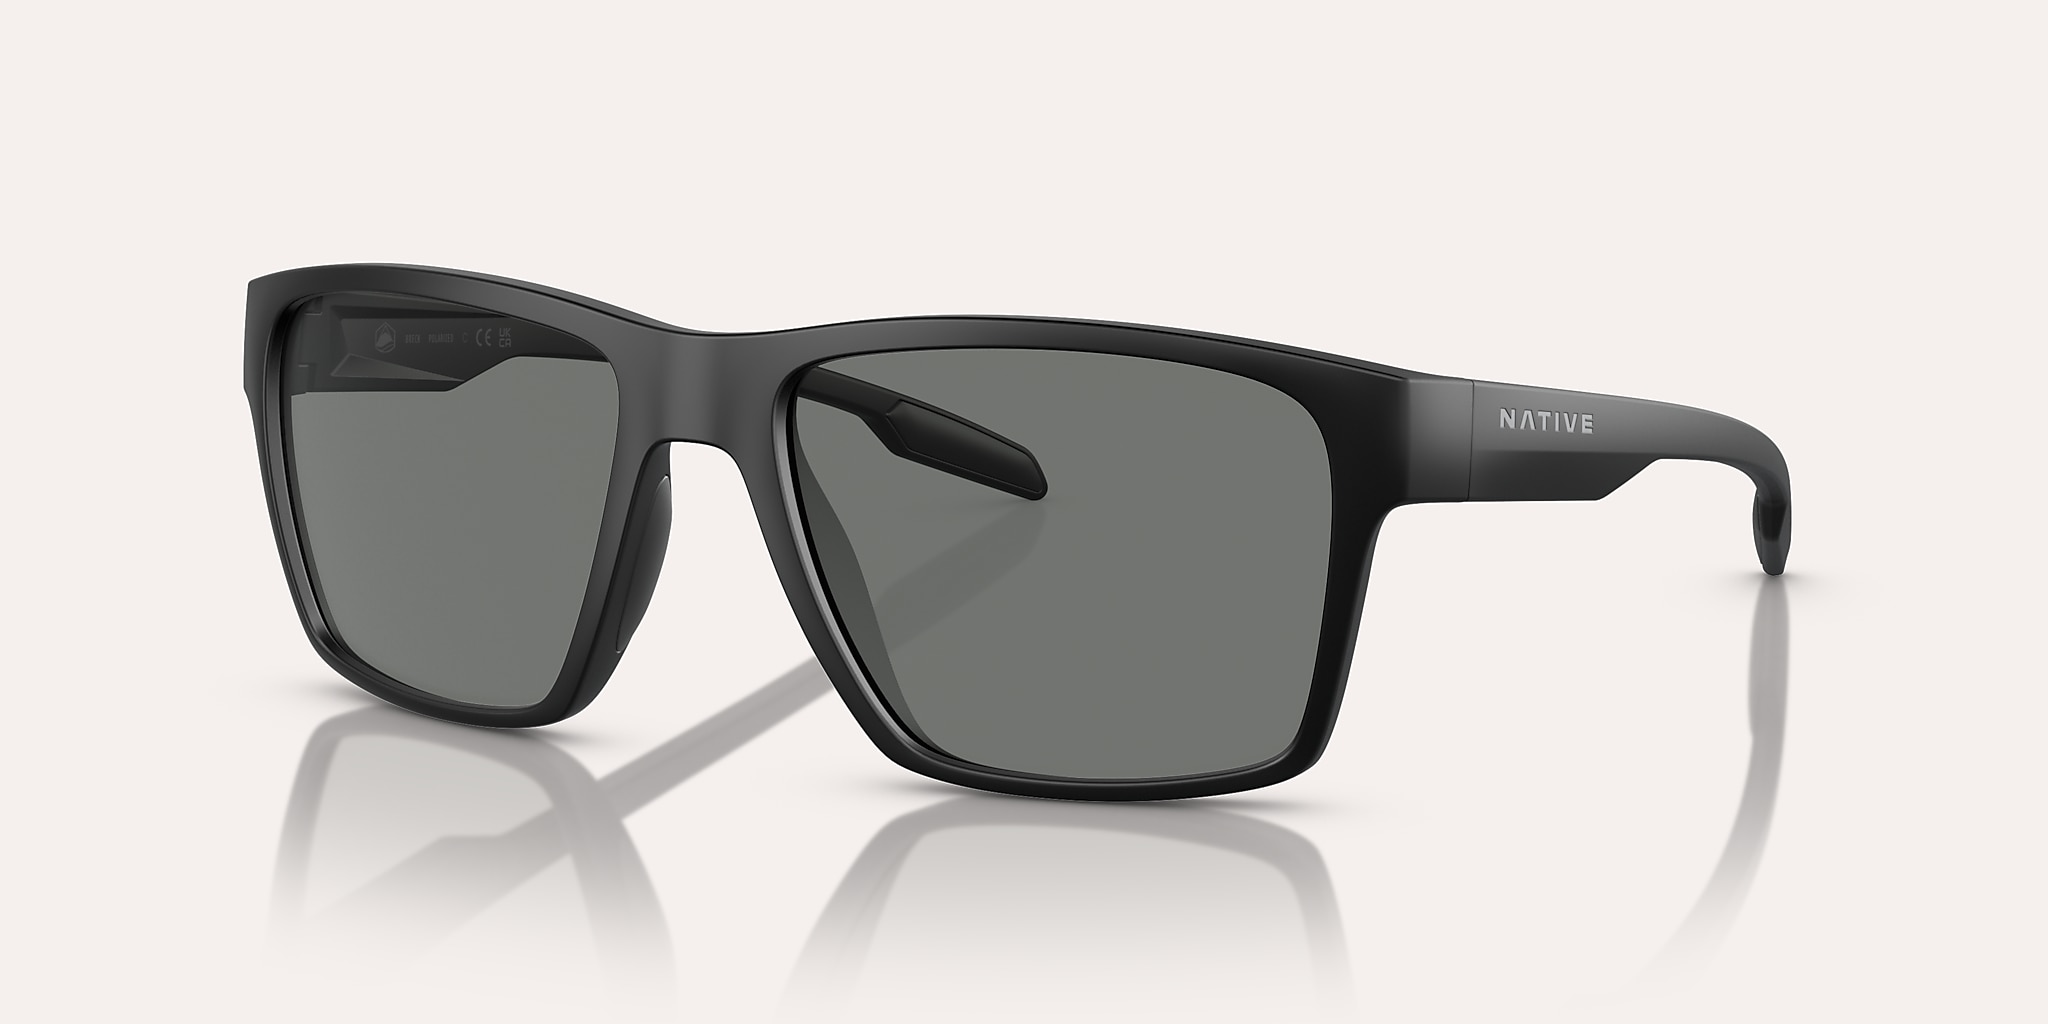 Breck Sunglasses in Grey Polarized